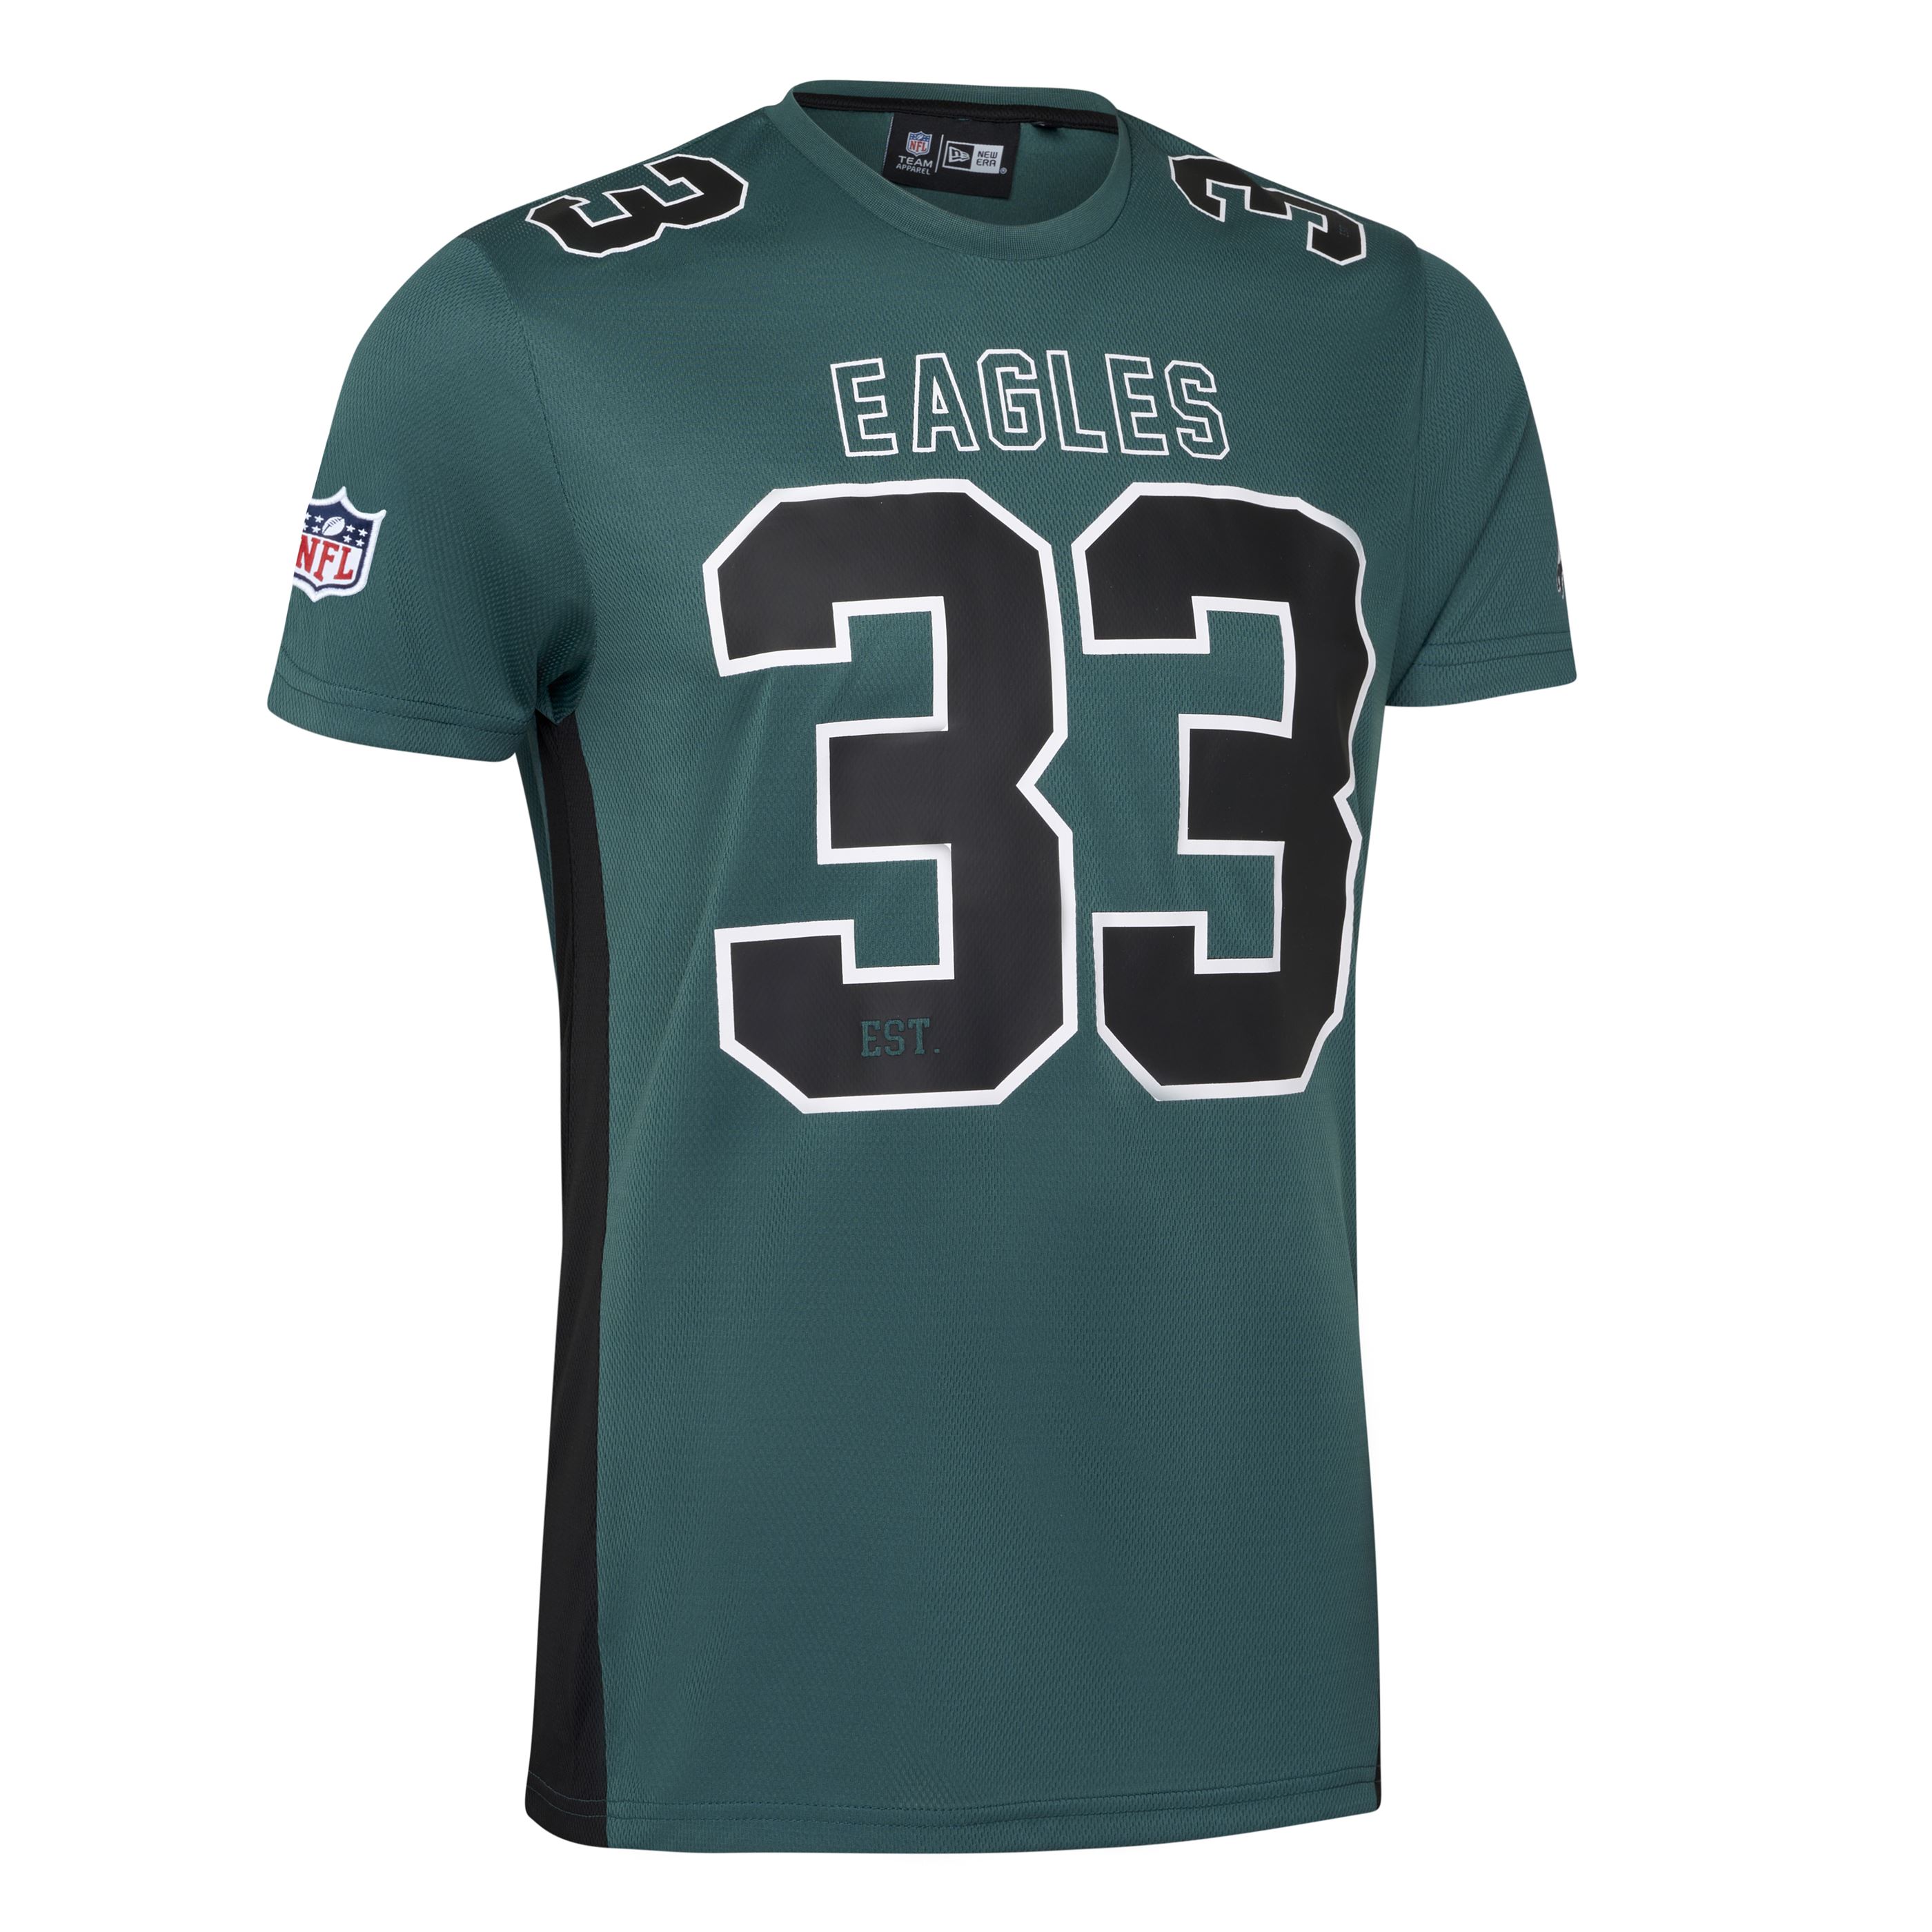 Philadelphia Eagles NFL Established Number Mesh Tee Green T-Shirt New Era